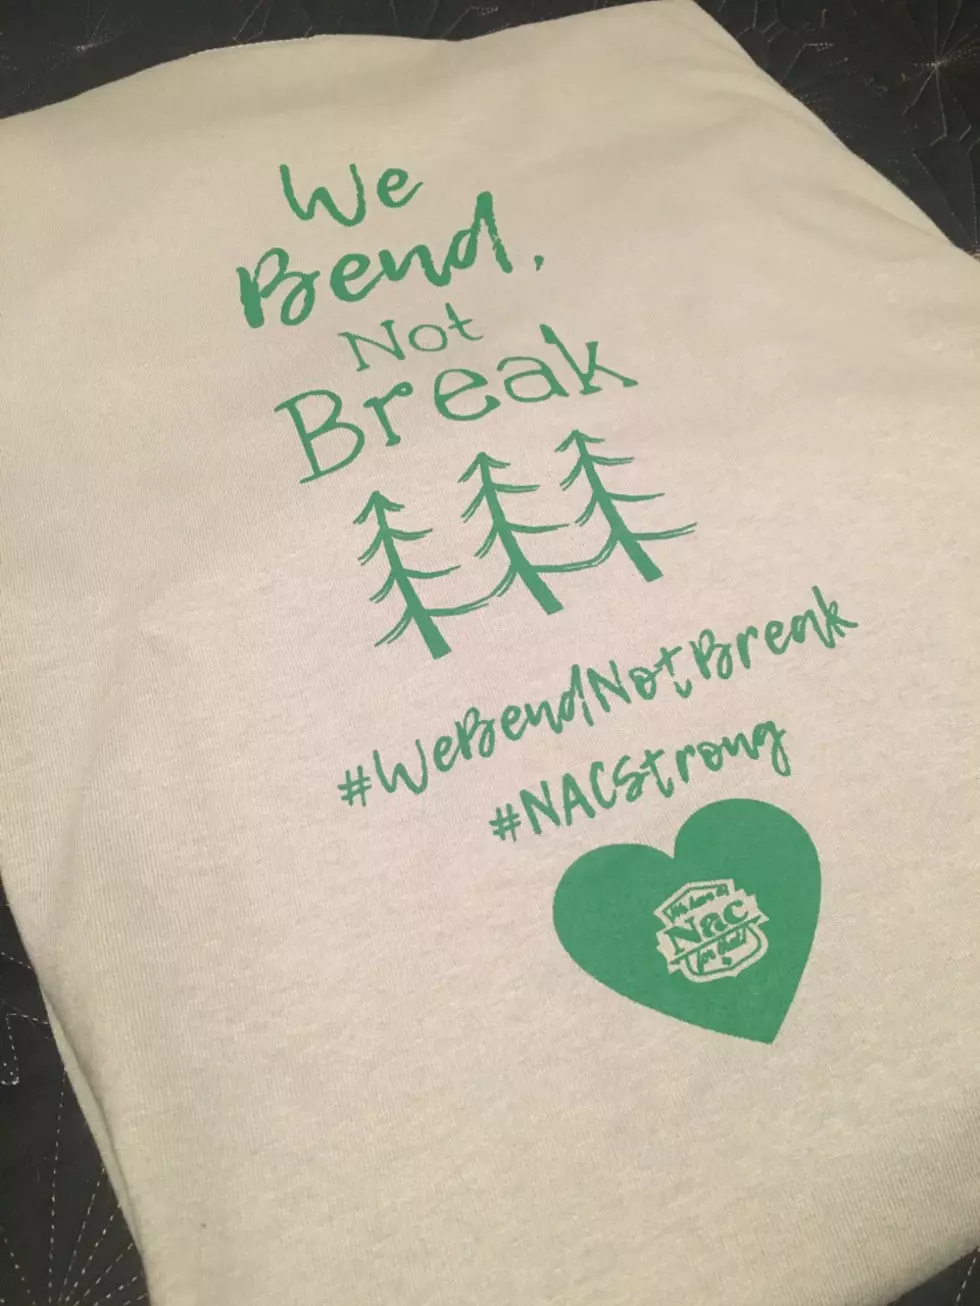 #WeBendNotBreak Shirts Arrive At Nacogdoches CVB, Check Them Out!